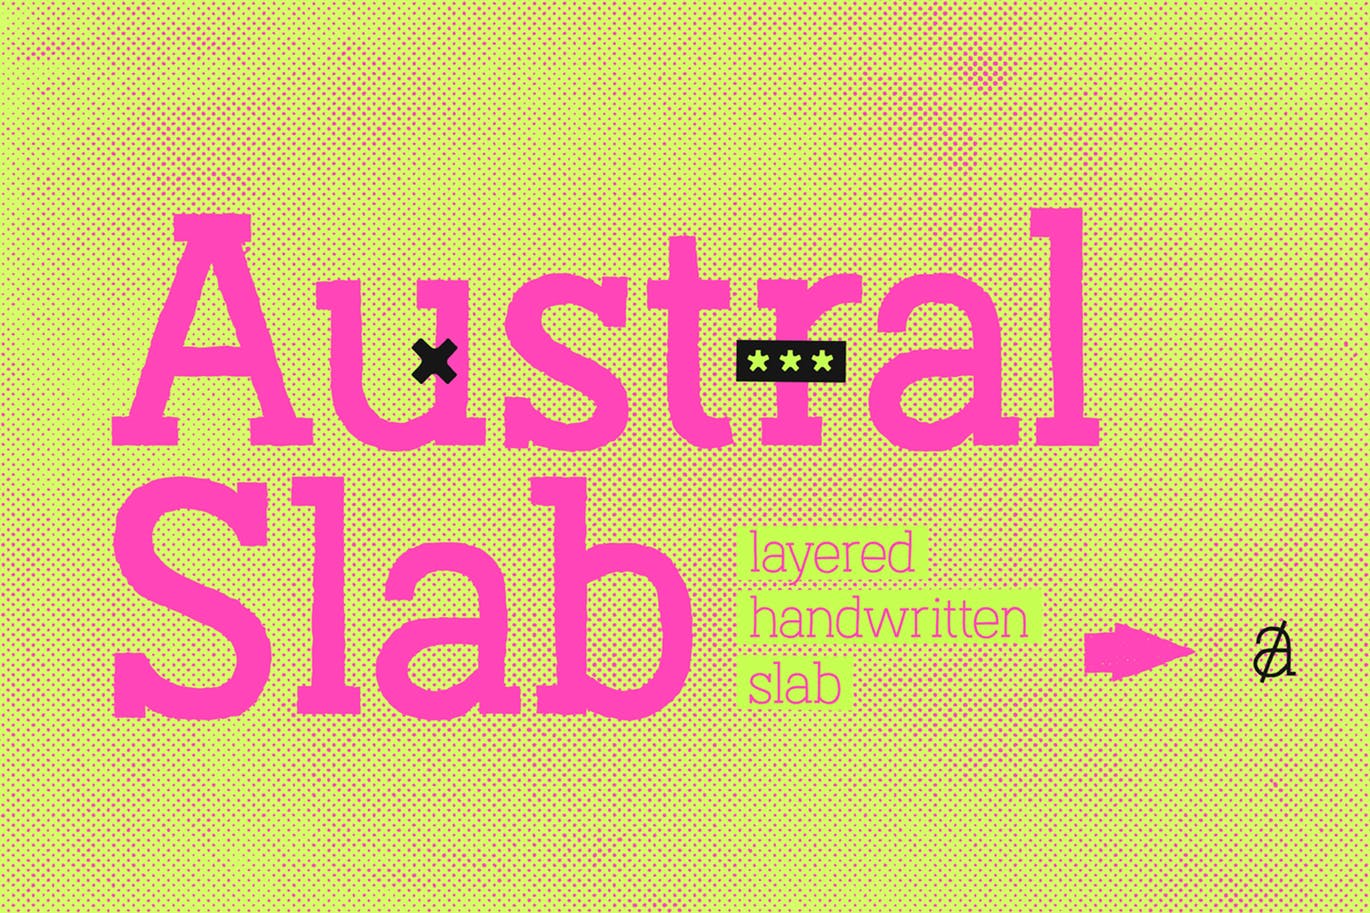 Austral Slab by antipixel on Envato Elements